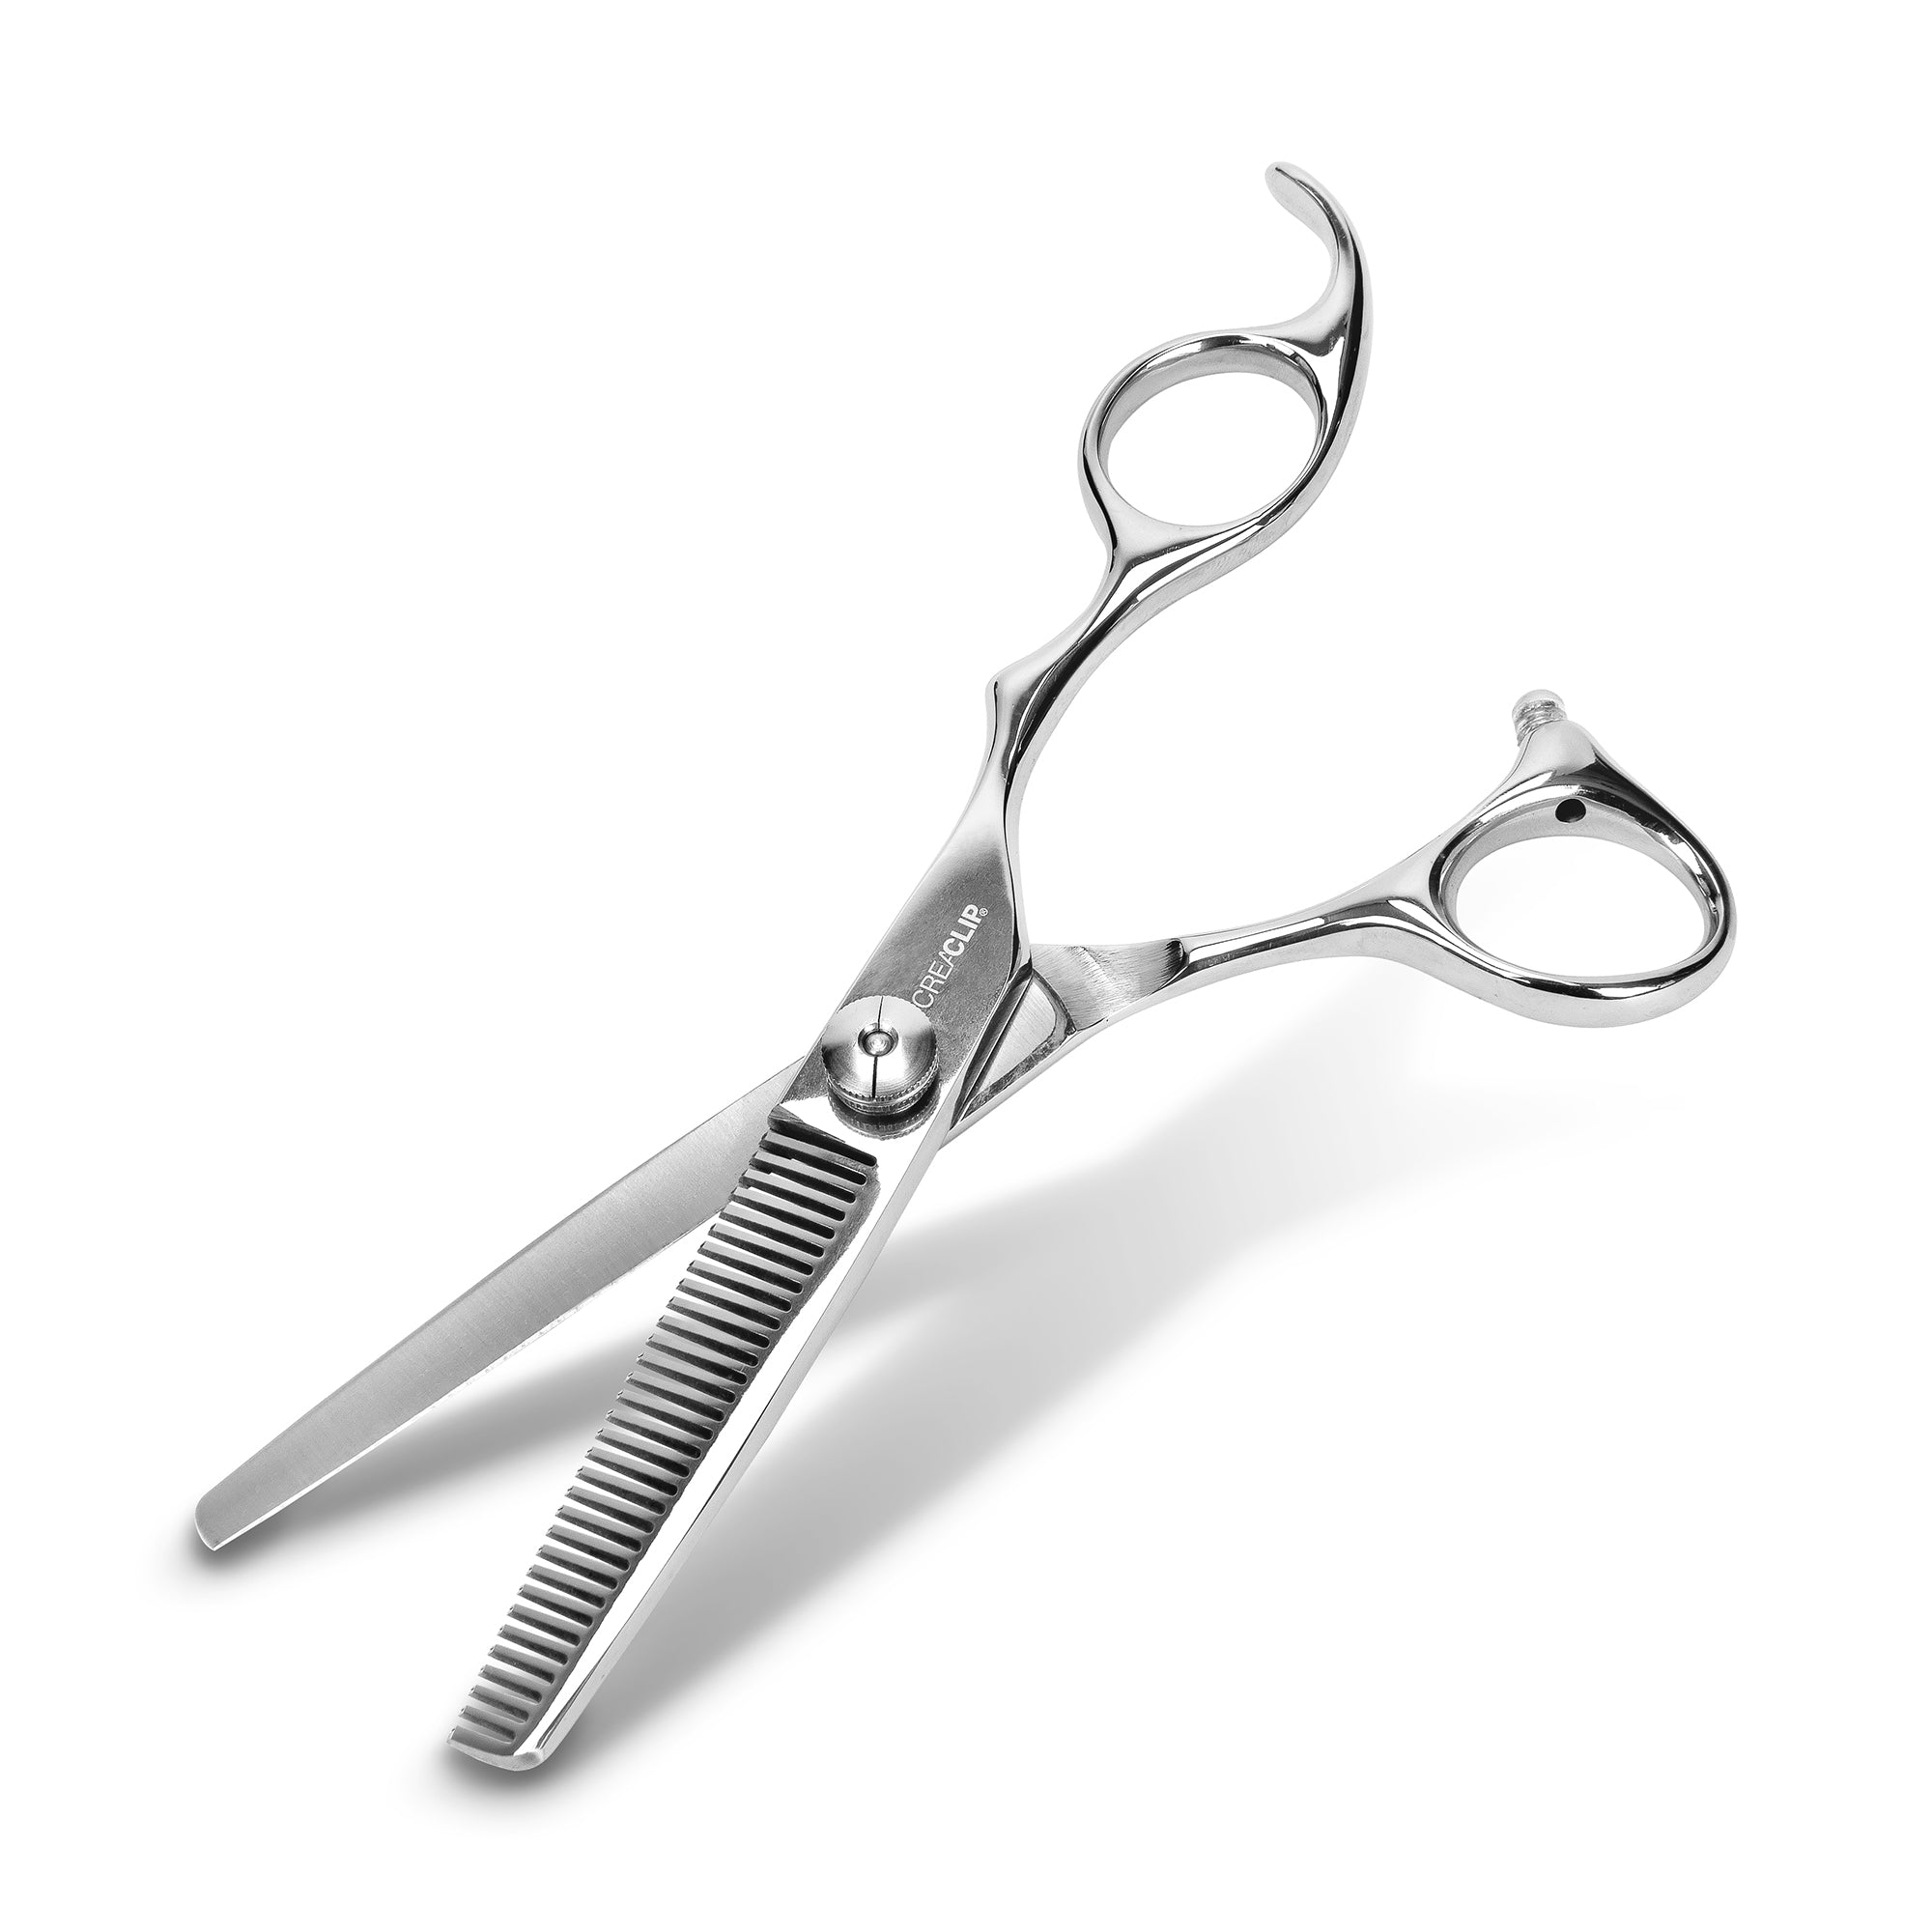 Professional Hair Cutting Beauty Scissors (PREMIUM PCA)